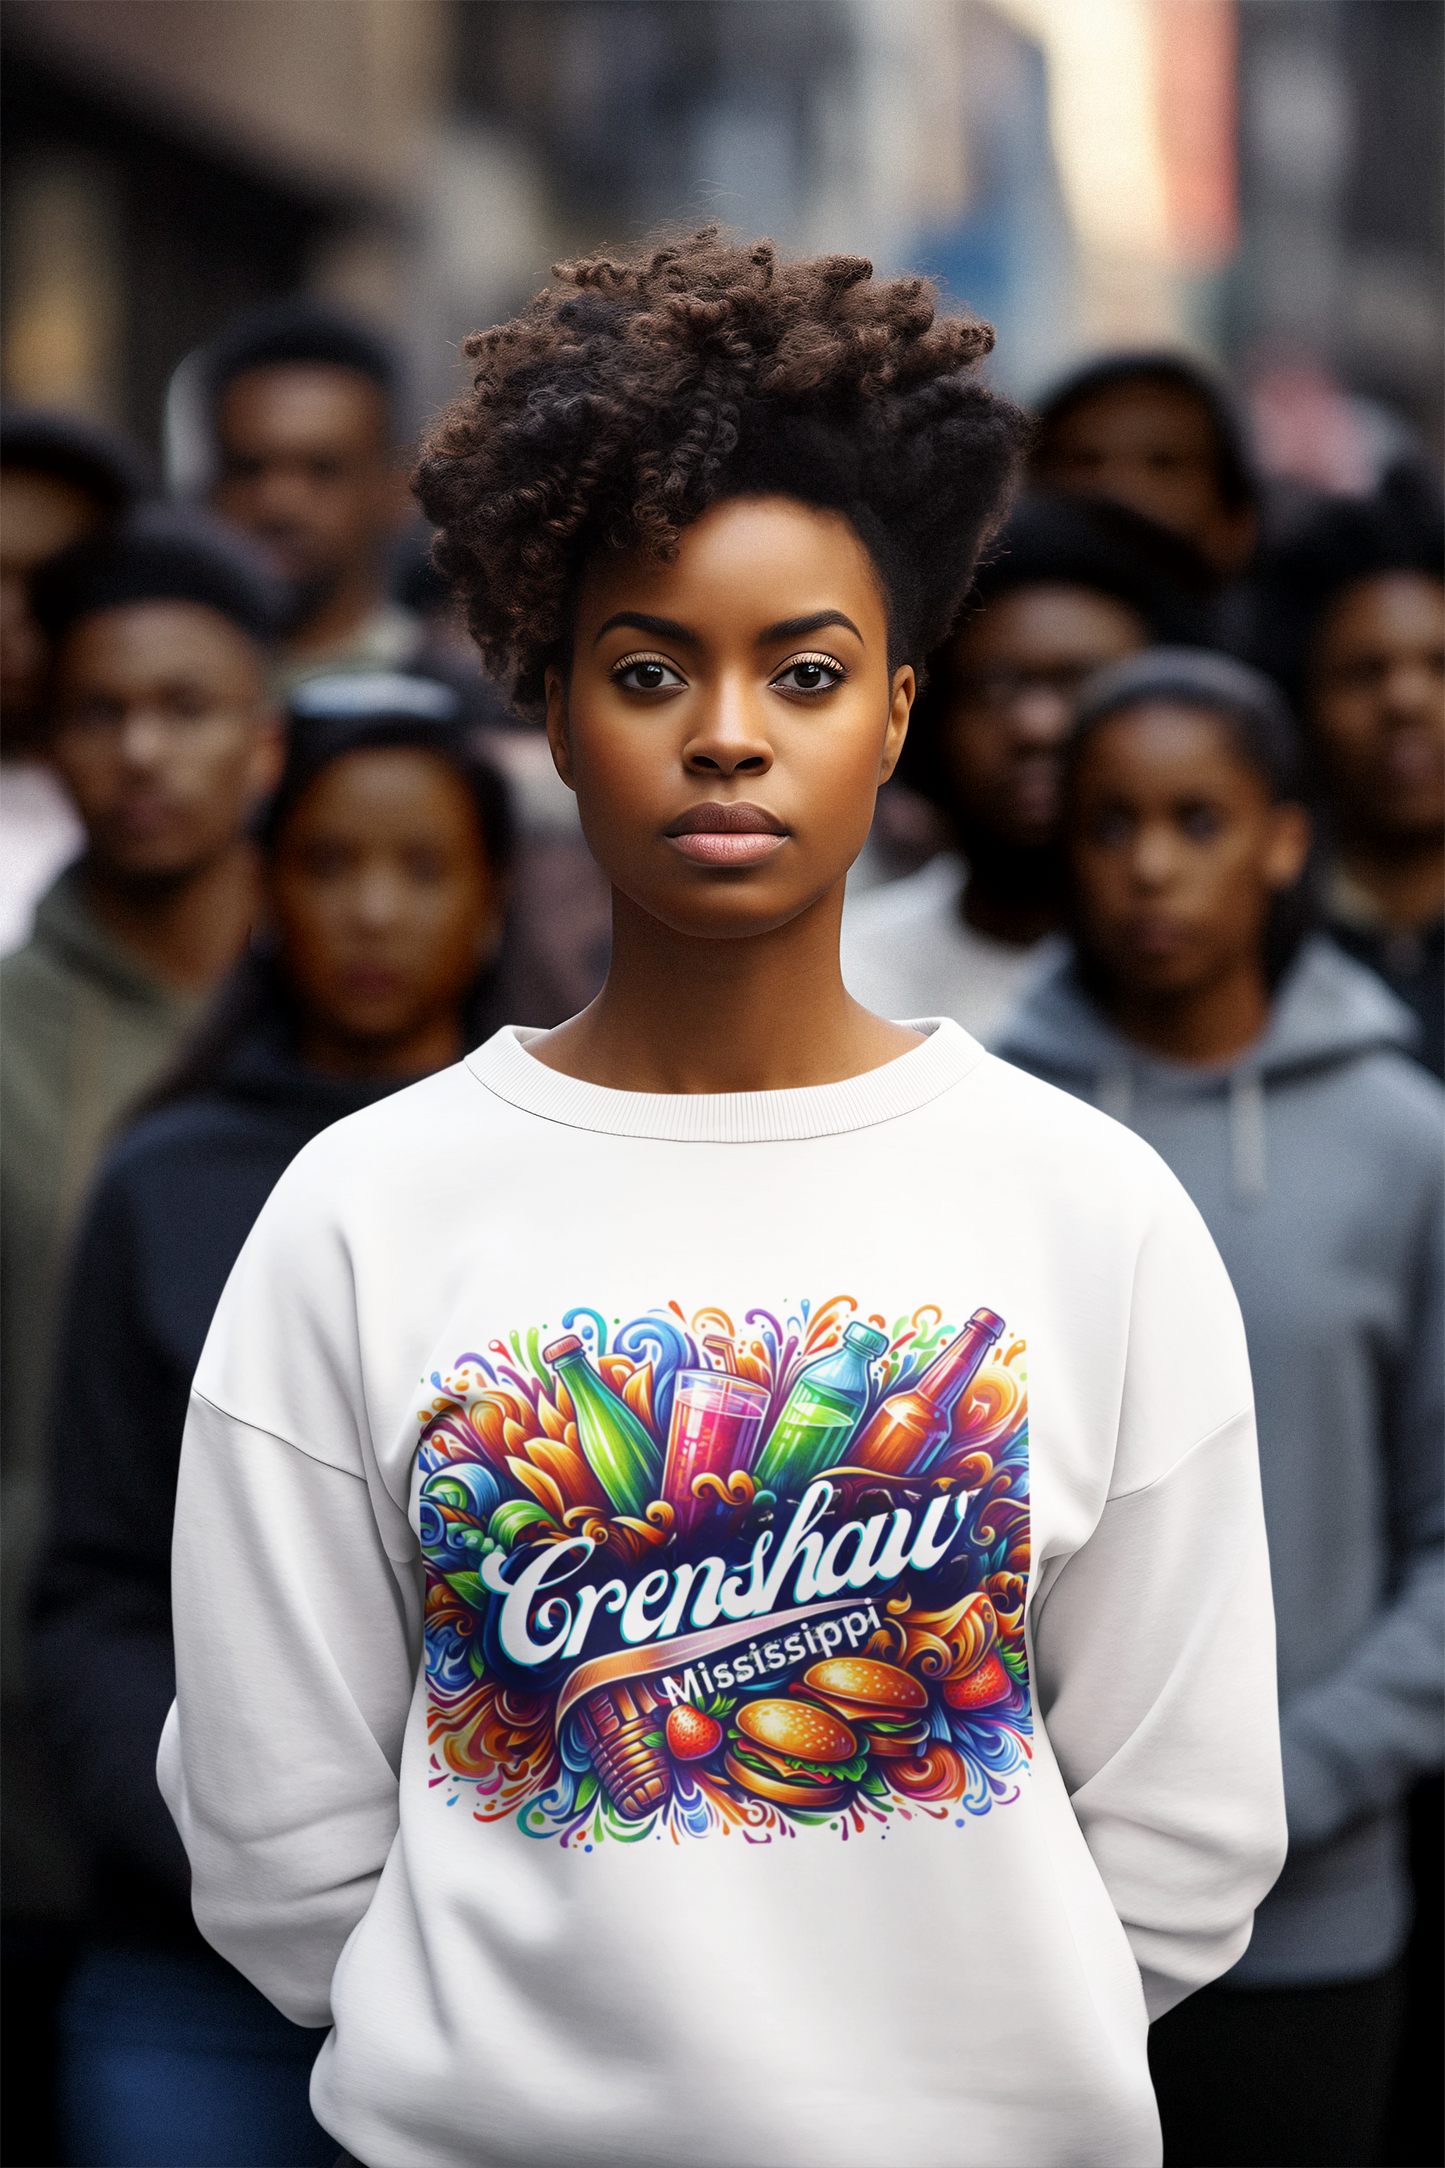 THE OTHER CRENSHAW:  CRENSHAW, MISSISSIPPI #1, Southern Graphic, African American Culture, Black History, Iconic Black Neighborhood, Graphic Sweatshirt, Urban Streetwear, Unisex, Crewneck Sweatshirt